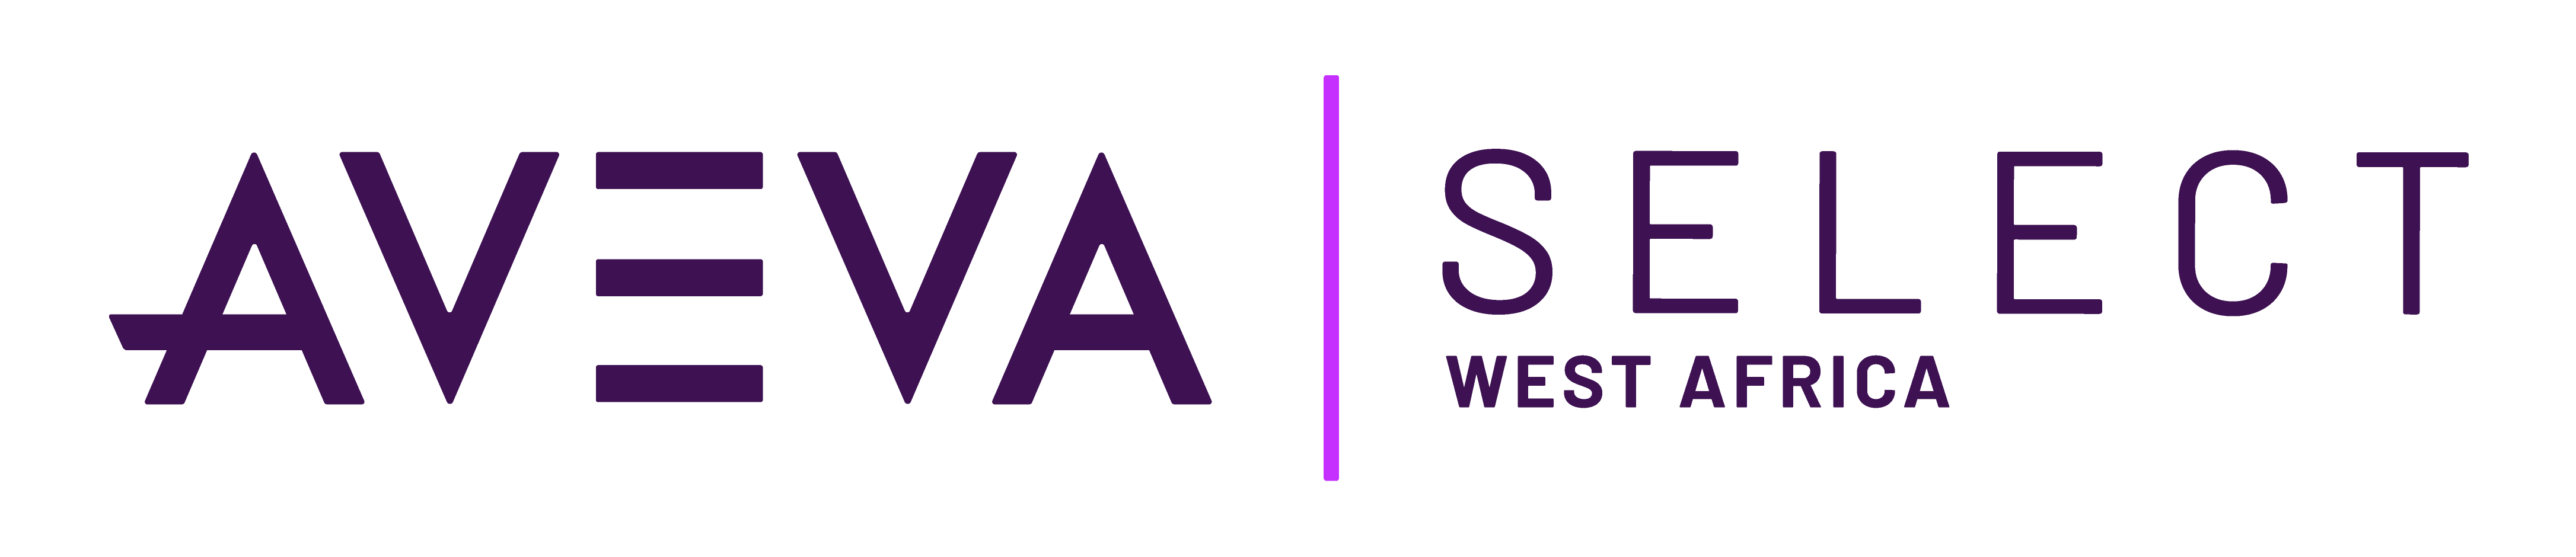 AVEVA Select West Africa logo